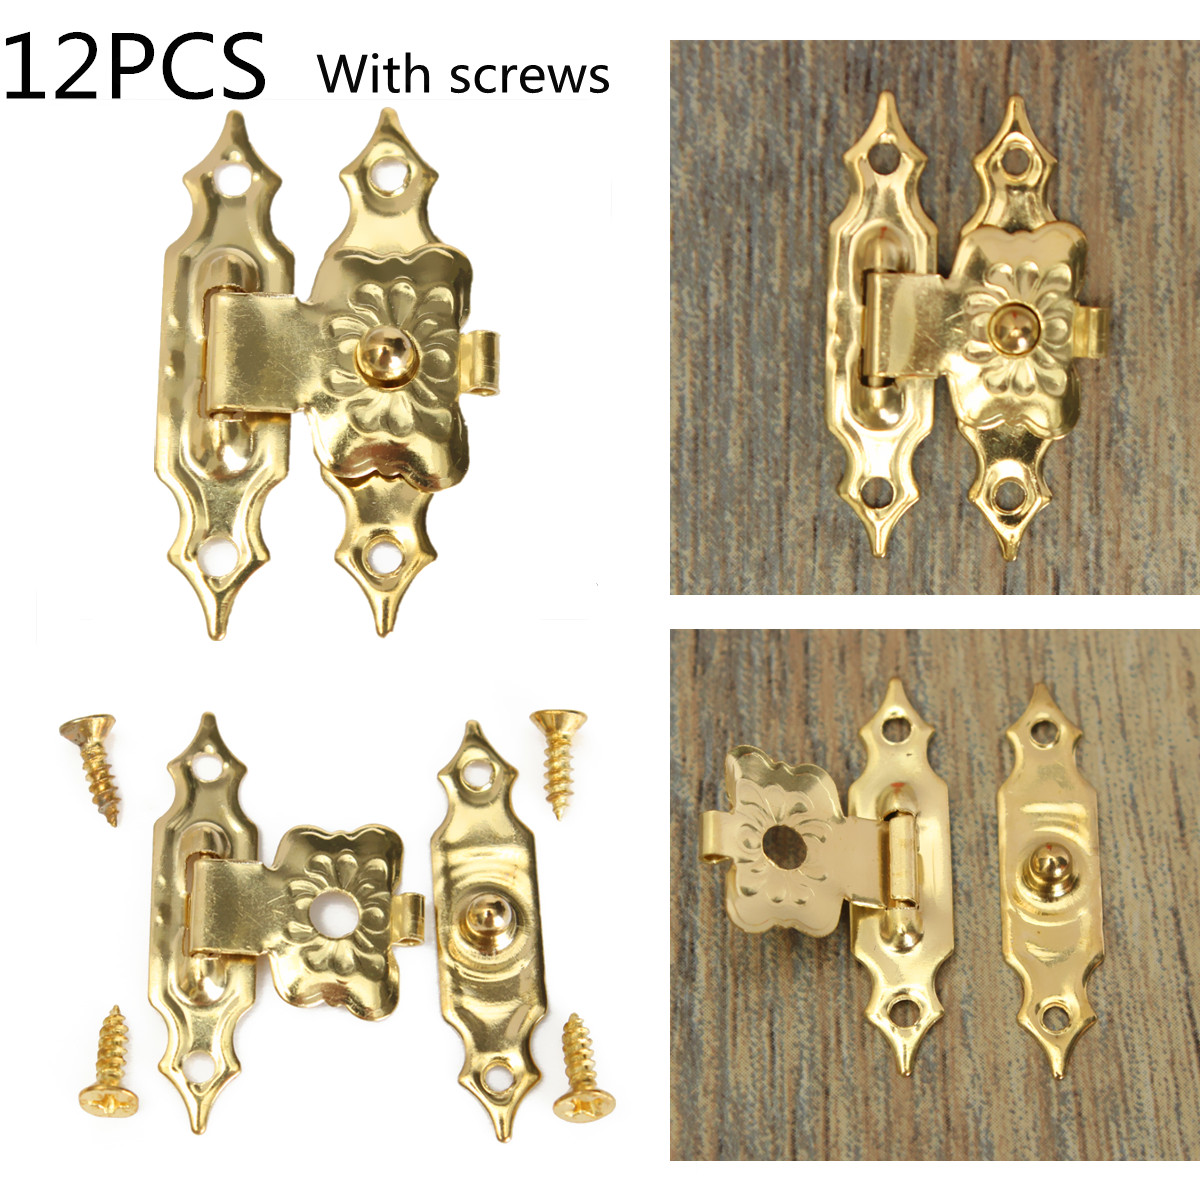 

12pcs Antique Decorative Jewelry Gift Wooden Box Hasp Latch Lock With Screw